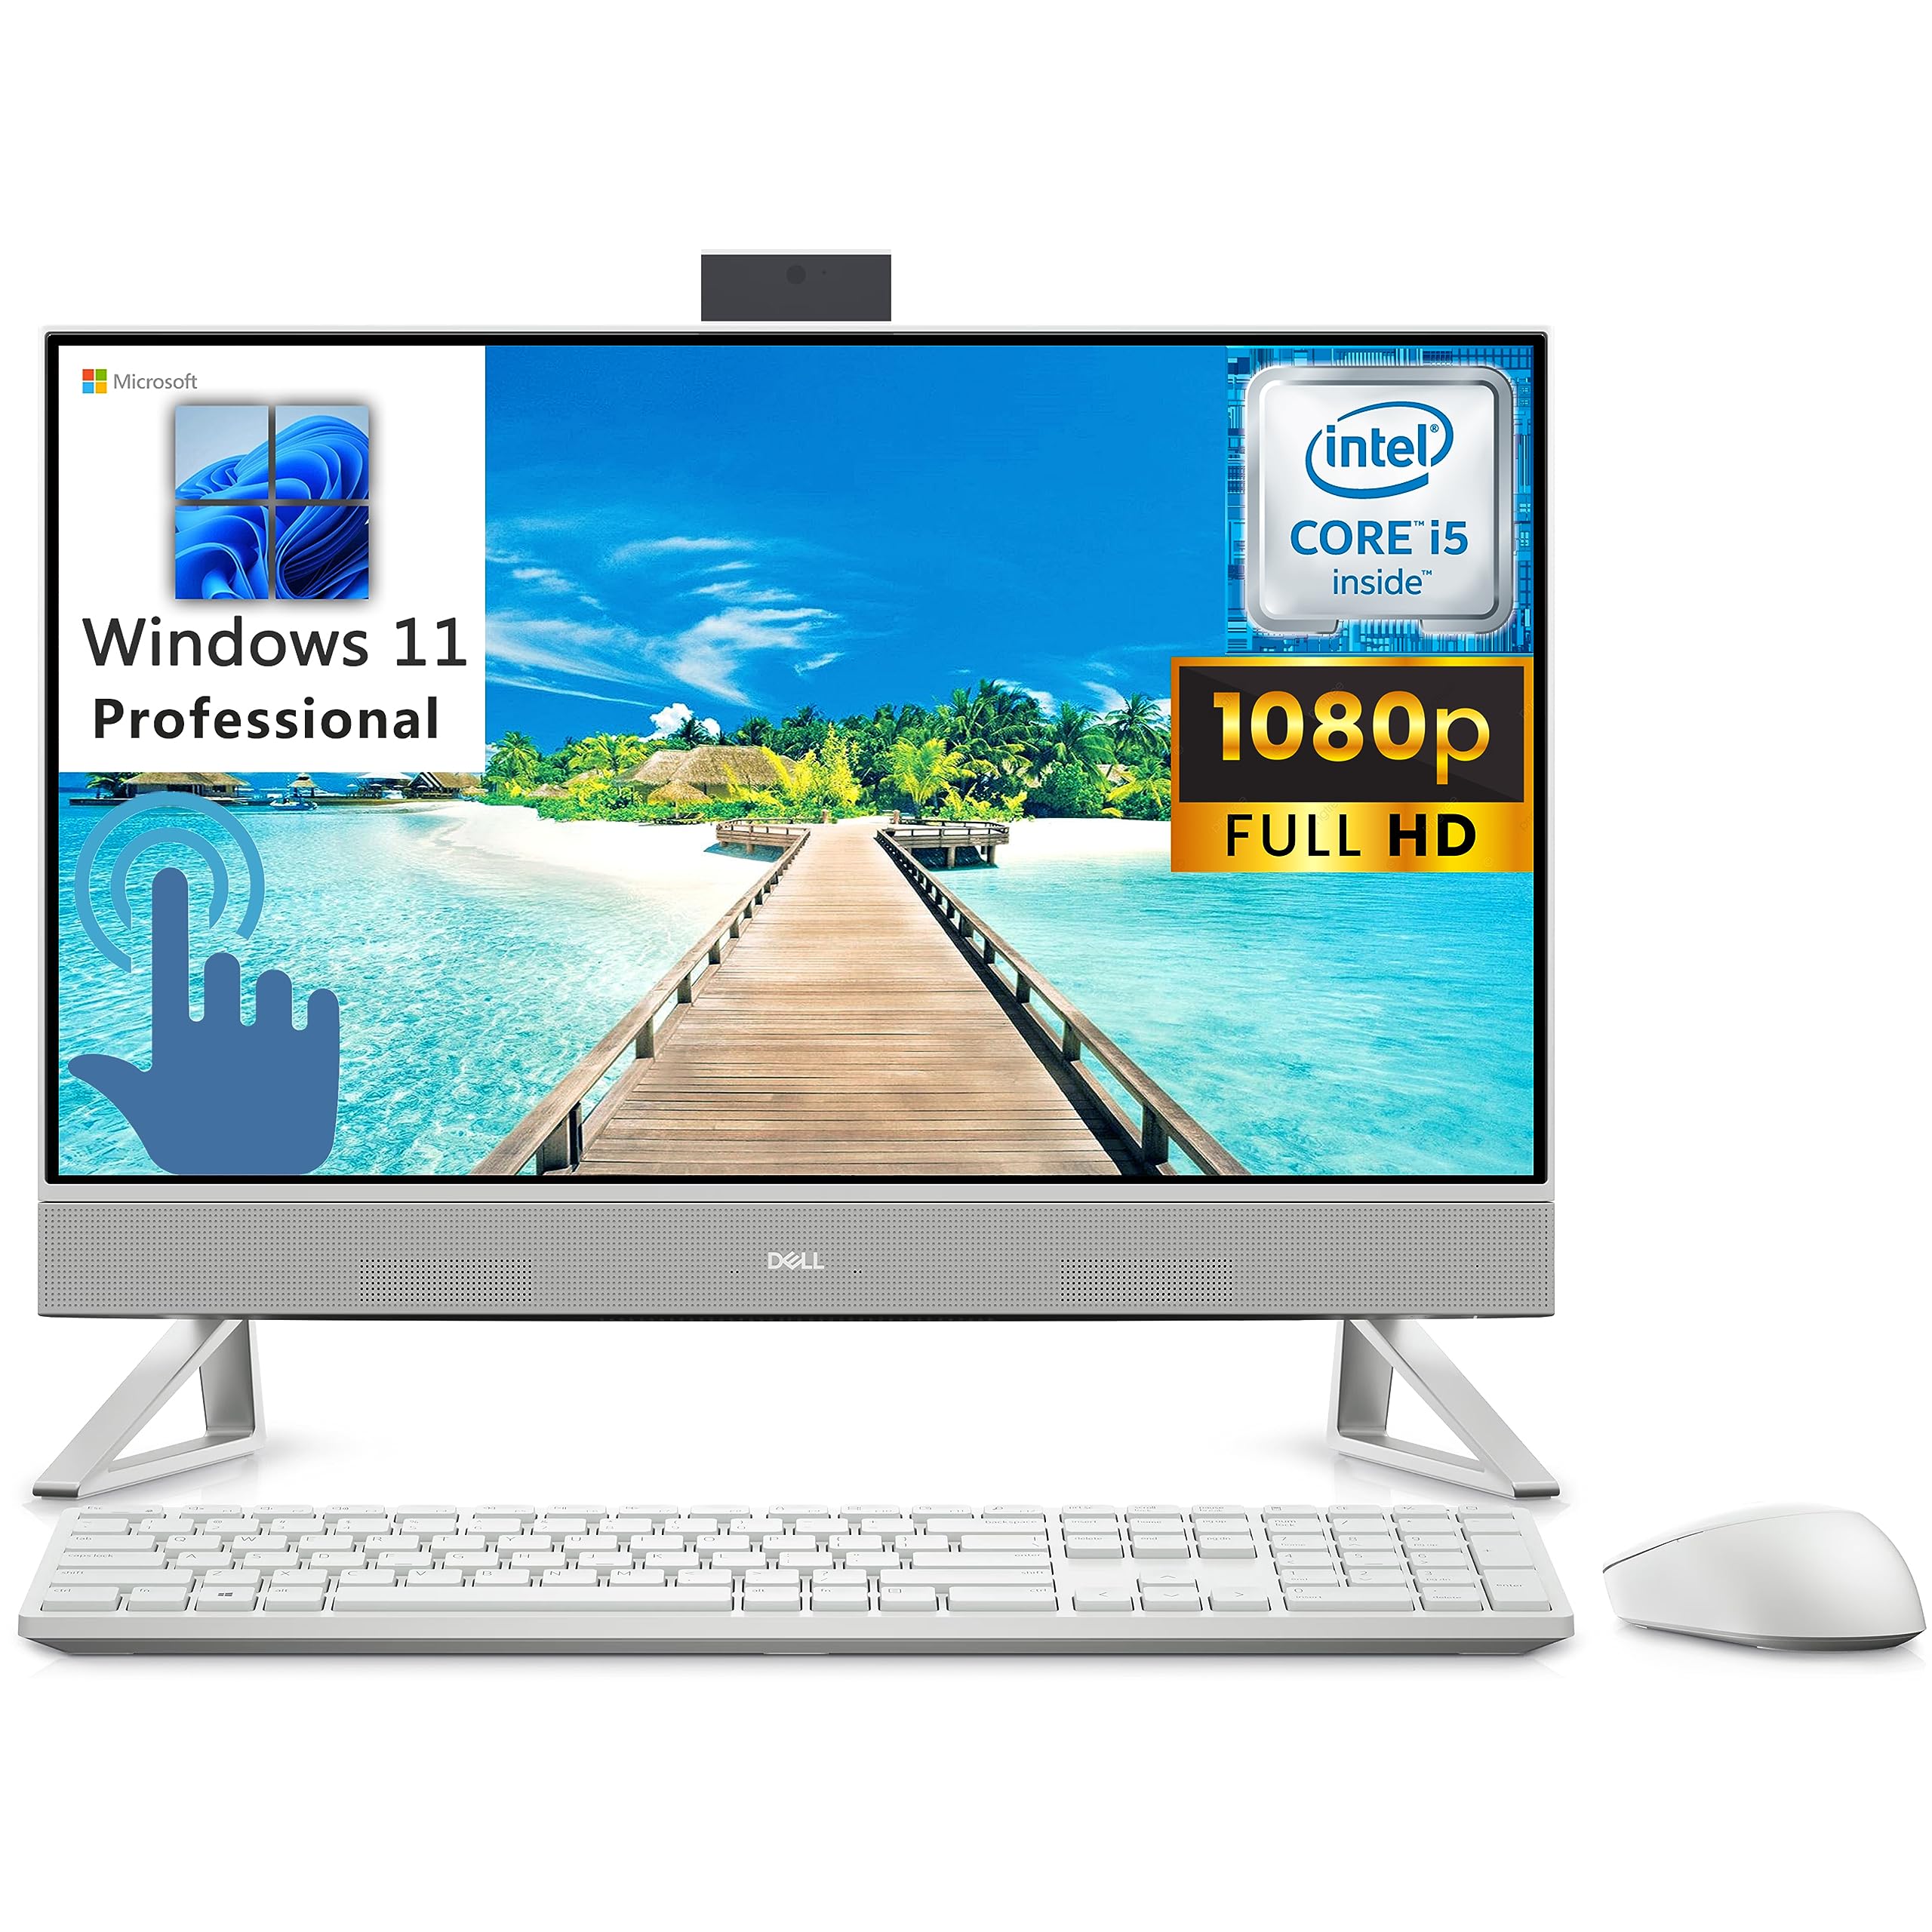 2023 Dell Inspiron 24 5410 23.8" Touchscreen FHD Business All-in-One Desktop Computer, 12th Gen Intel 10-Core i5-1235U, 16GB DDR4 RAM, 512GB PCIe SSD, WiFi6, Bluetooth 5.2, Pearl White, Windows 11 Pro